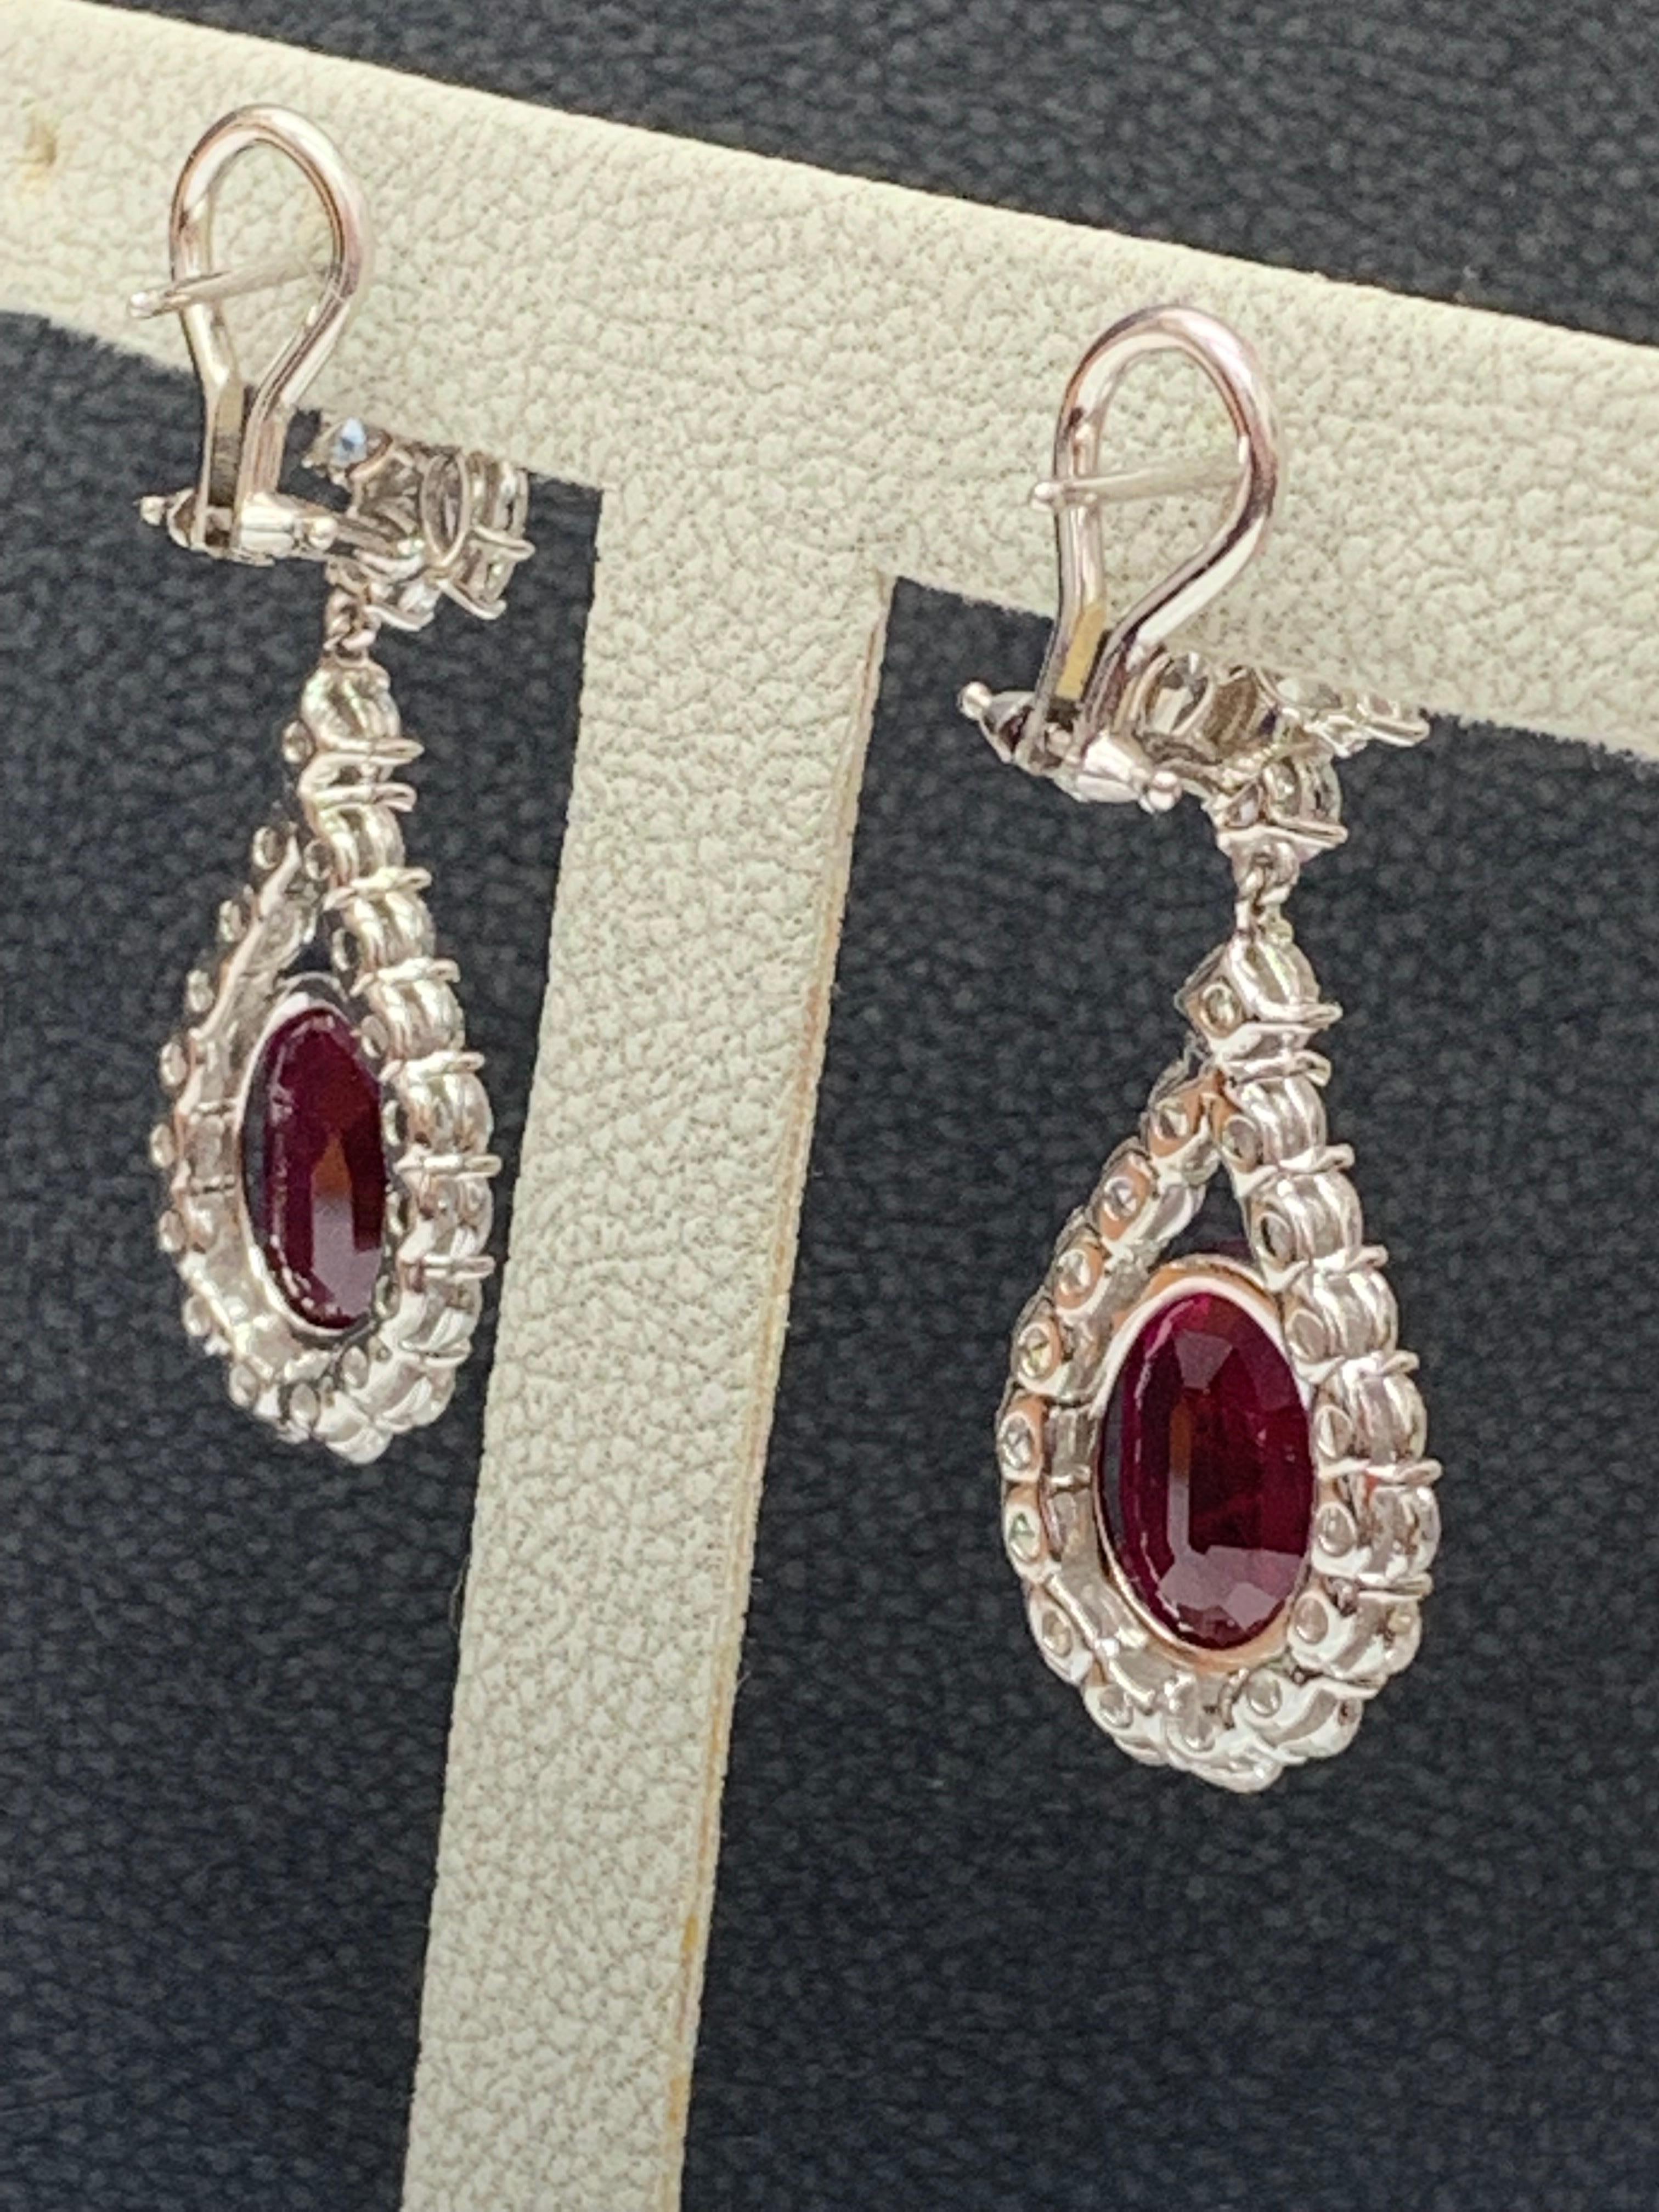 Oval Cut Certified 9.05 Carat Burma Ruby and Diamond Drop Earrings in 18K White Gold For Sale